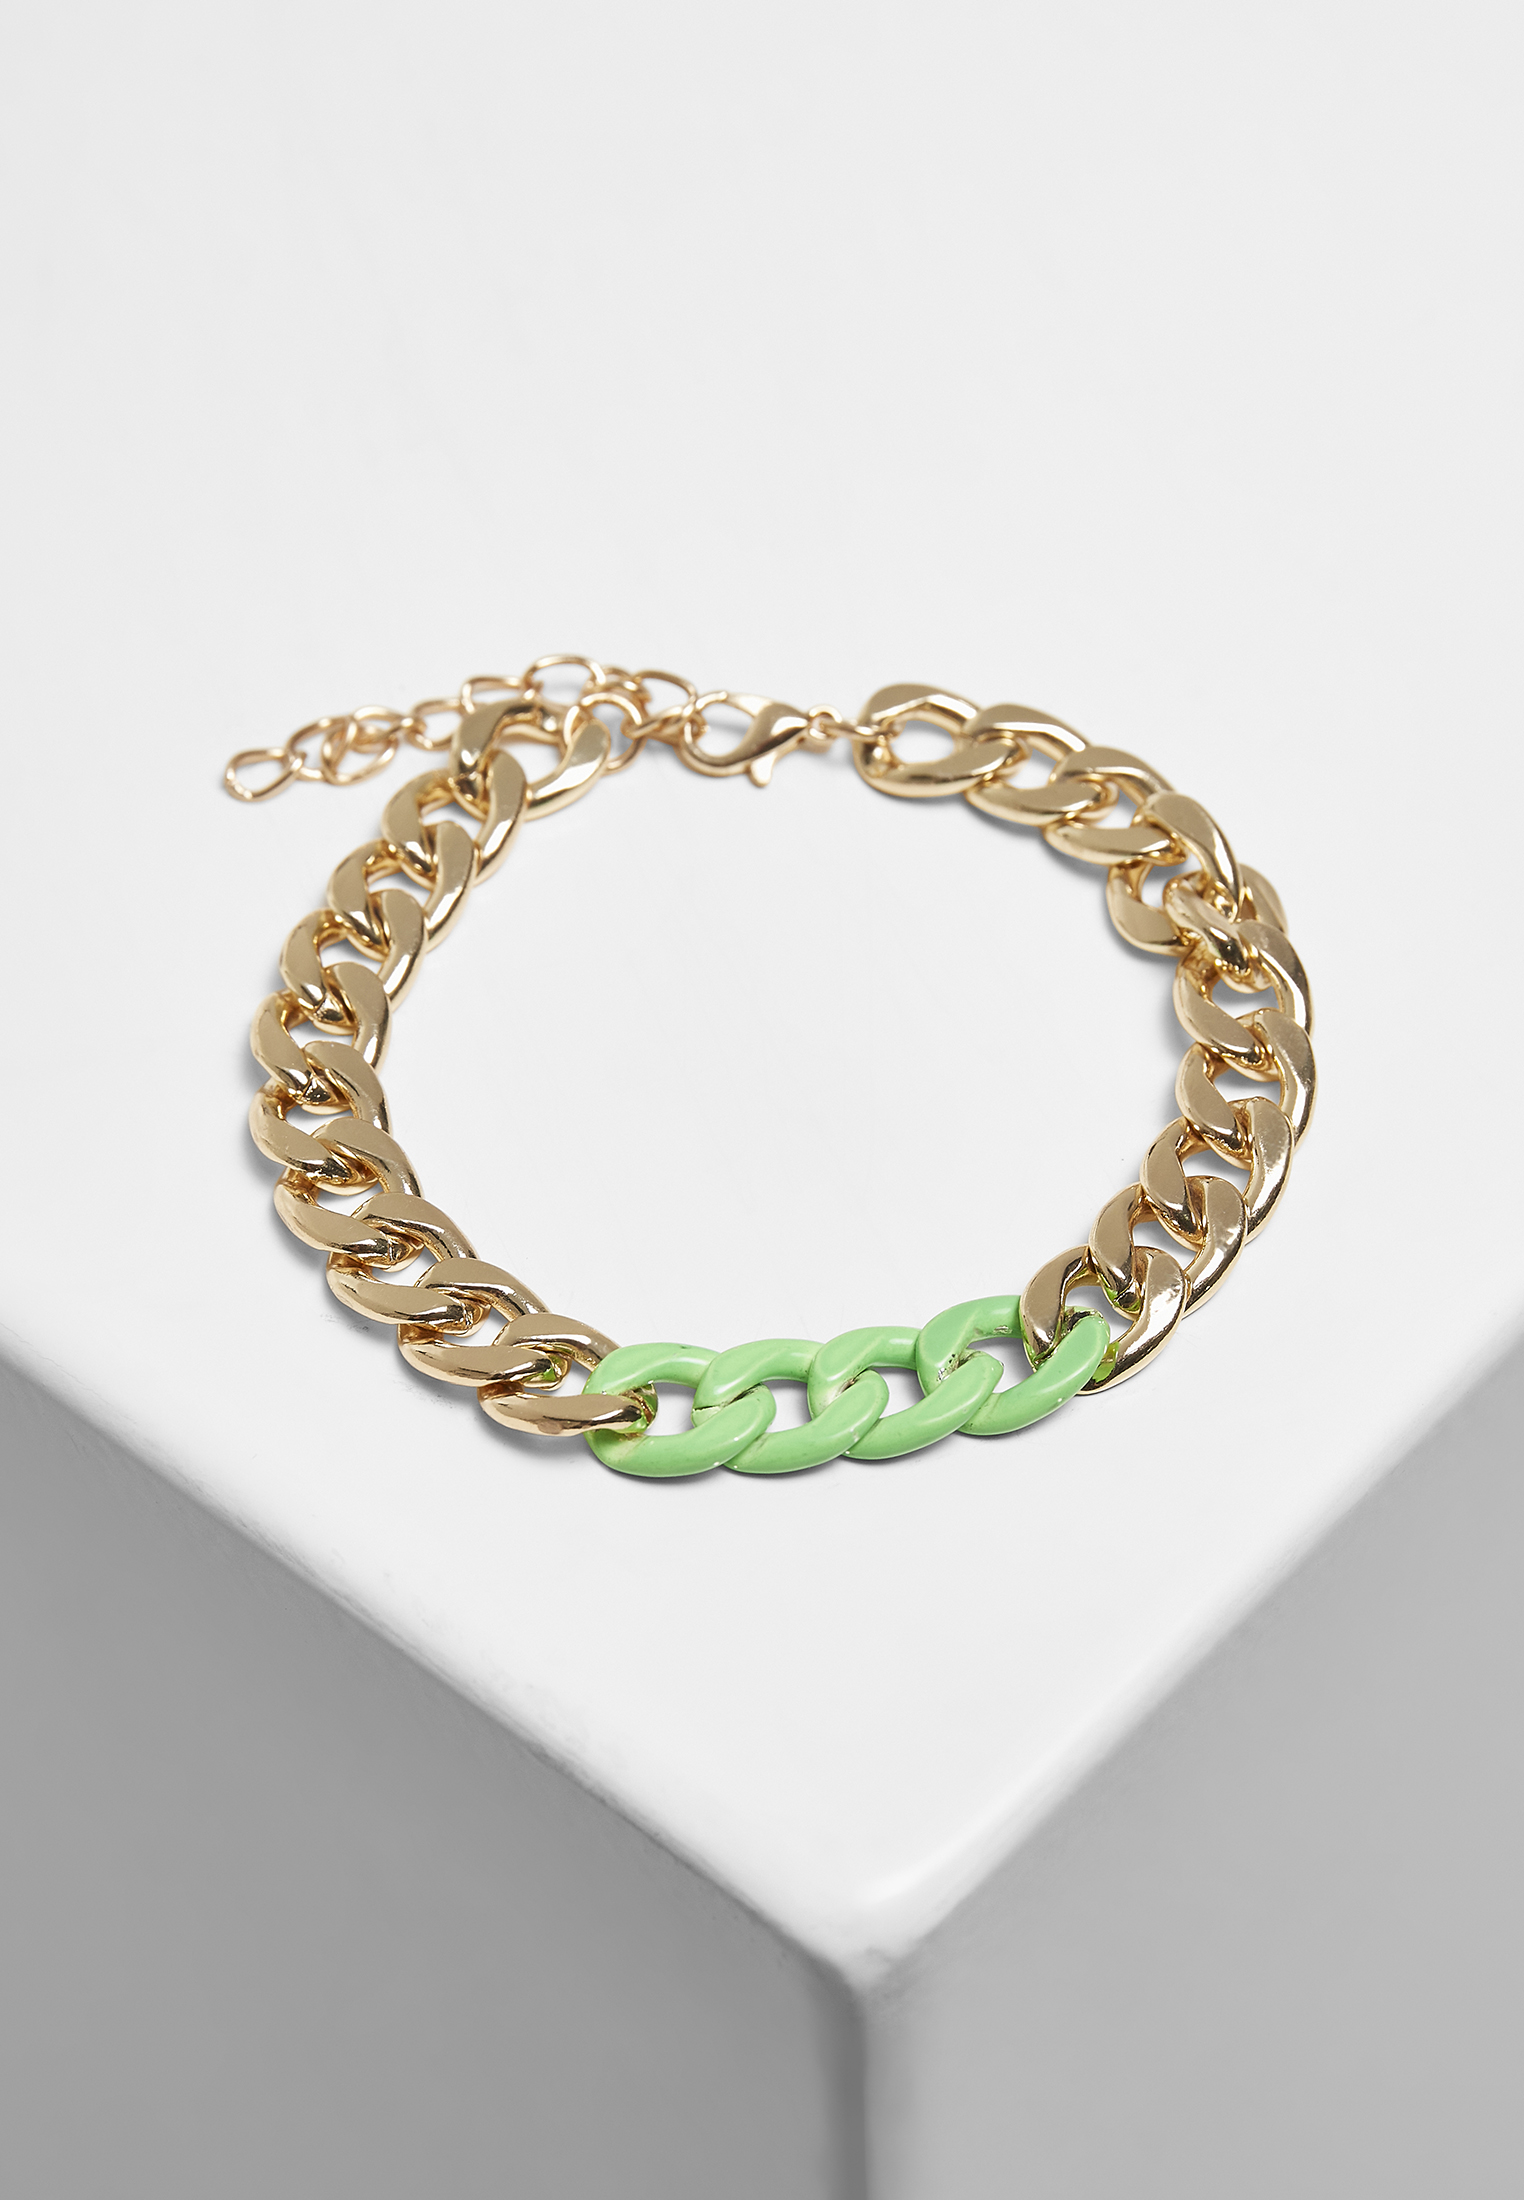 Schmuck Colored Basic Bracelet in Farbe gold/neongreen